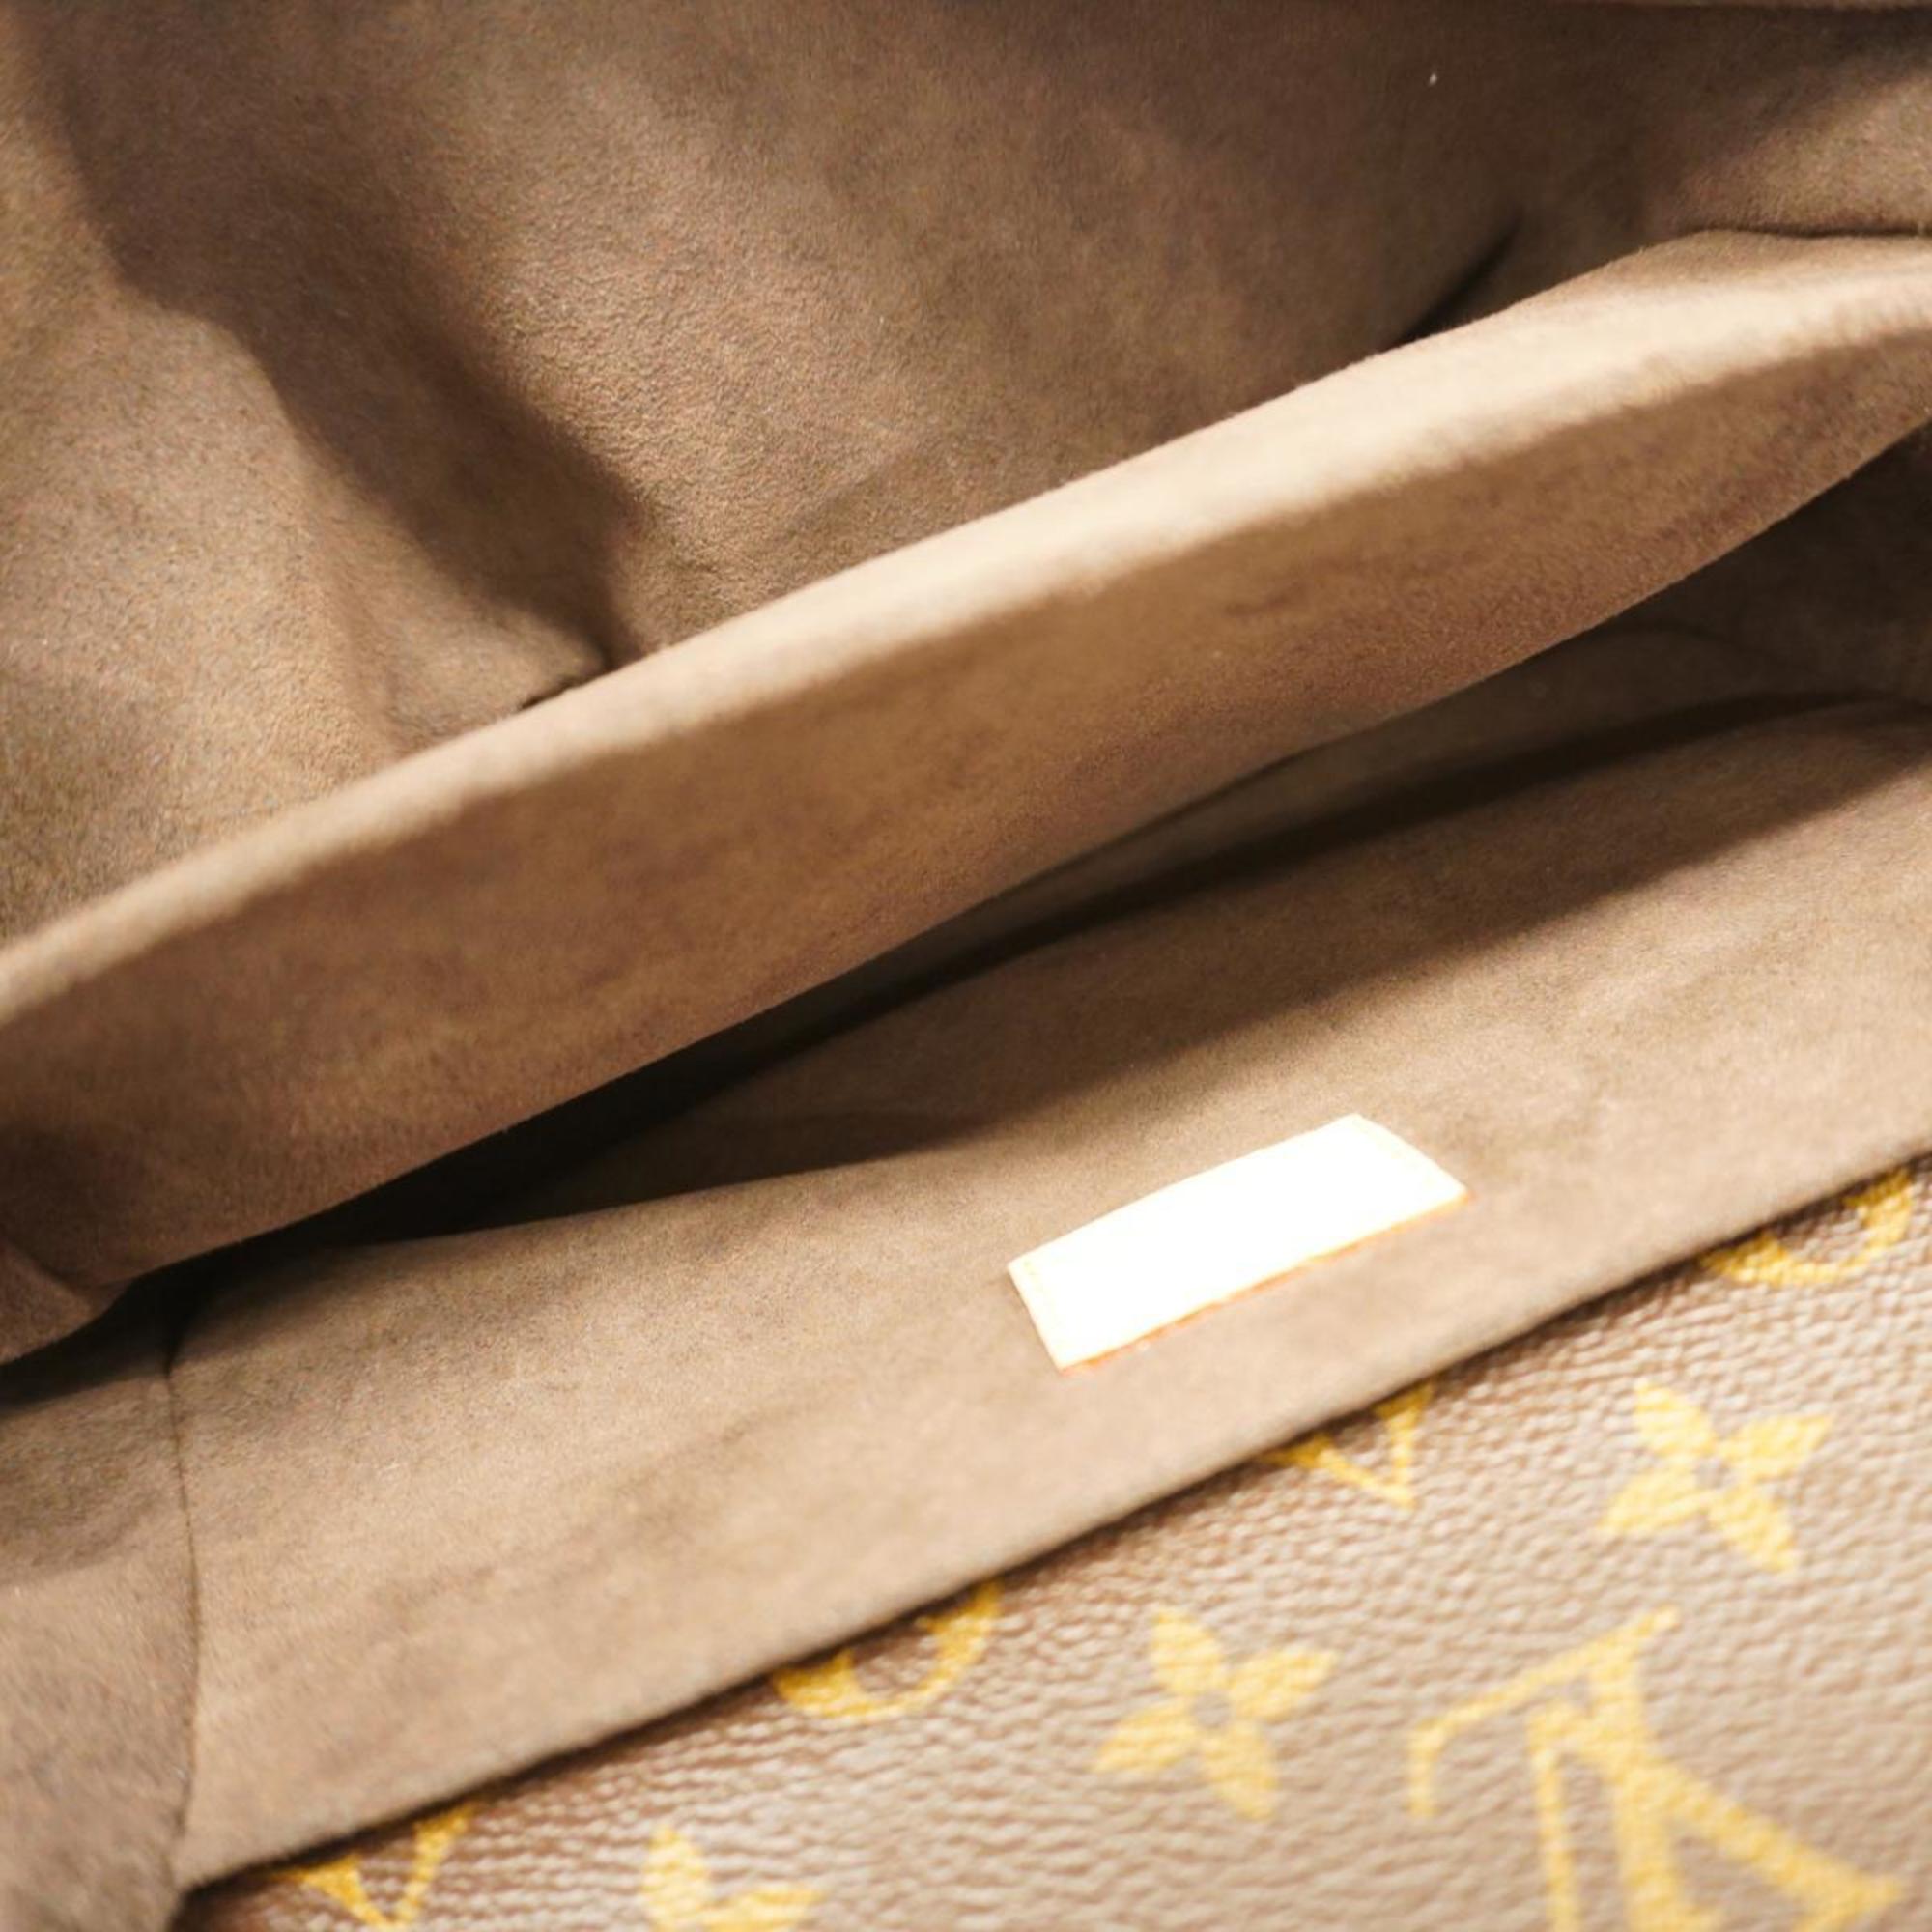 Louis Vuitton Shoulder Bag Monogram Pochette Metis MM M44875 Brown Women's